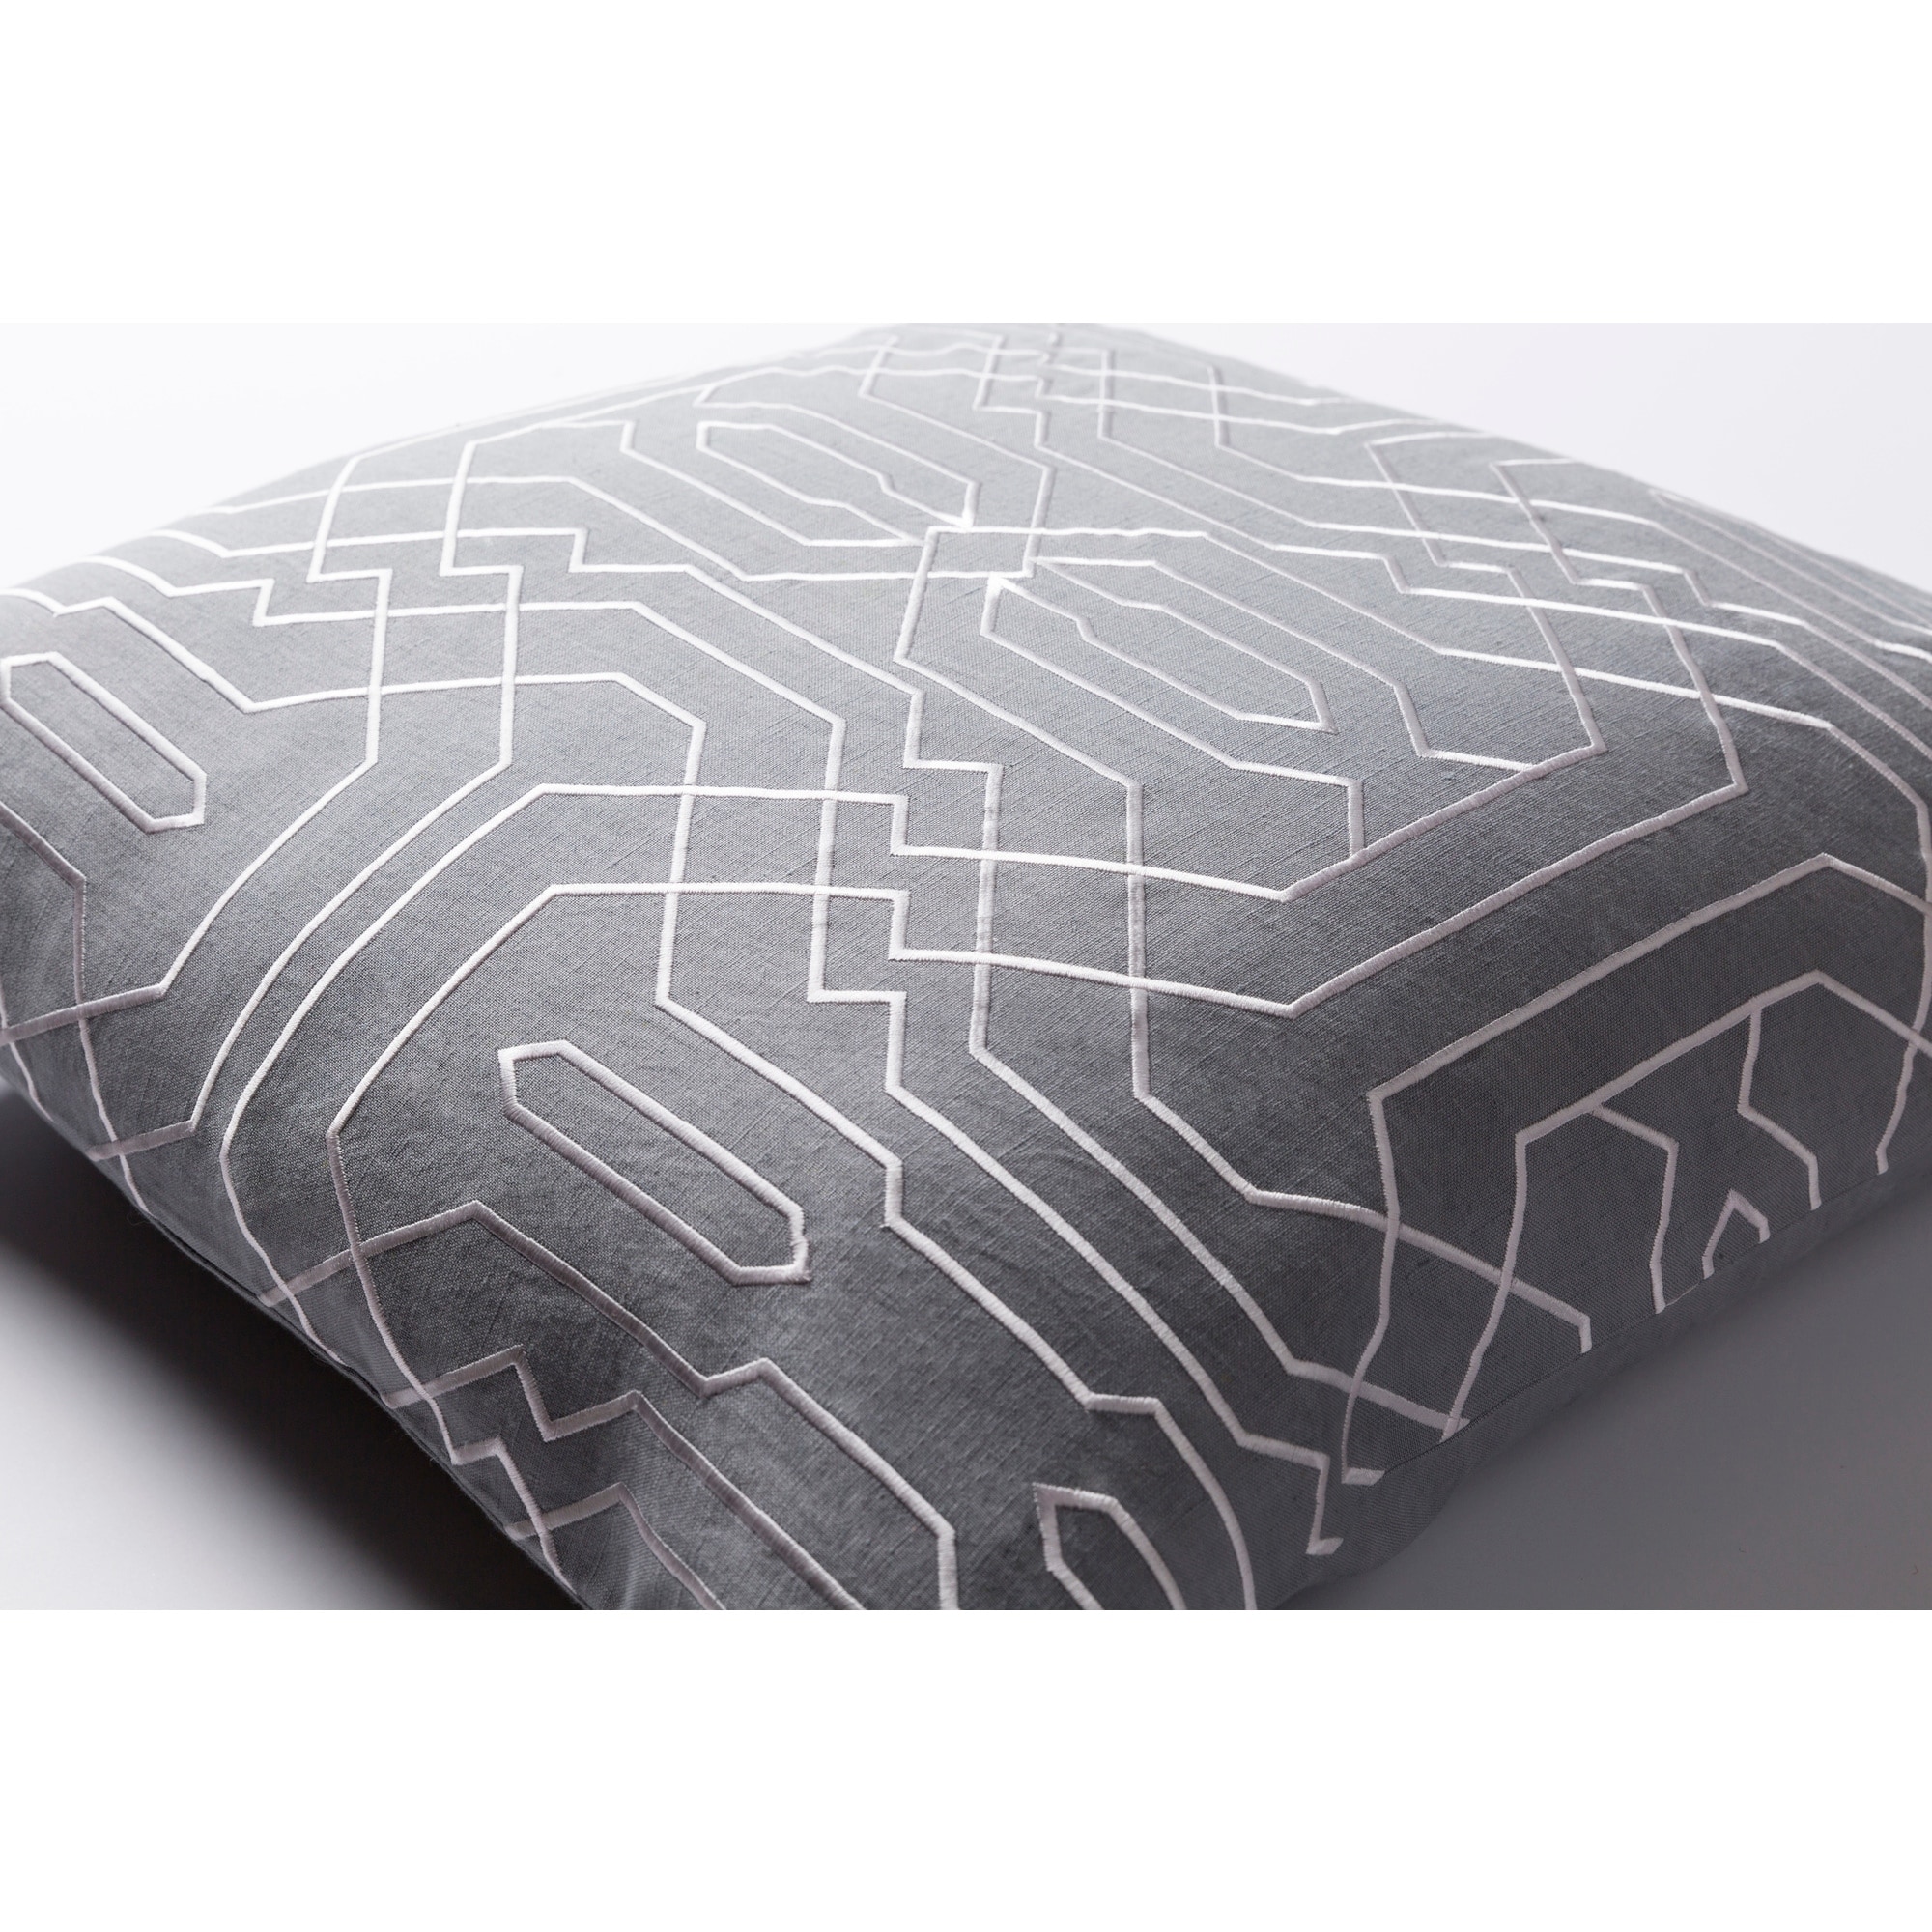 Decorative Stone Medium Grey 20-inch Throw Pillow Cover